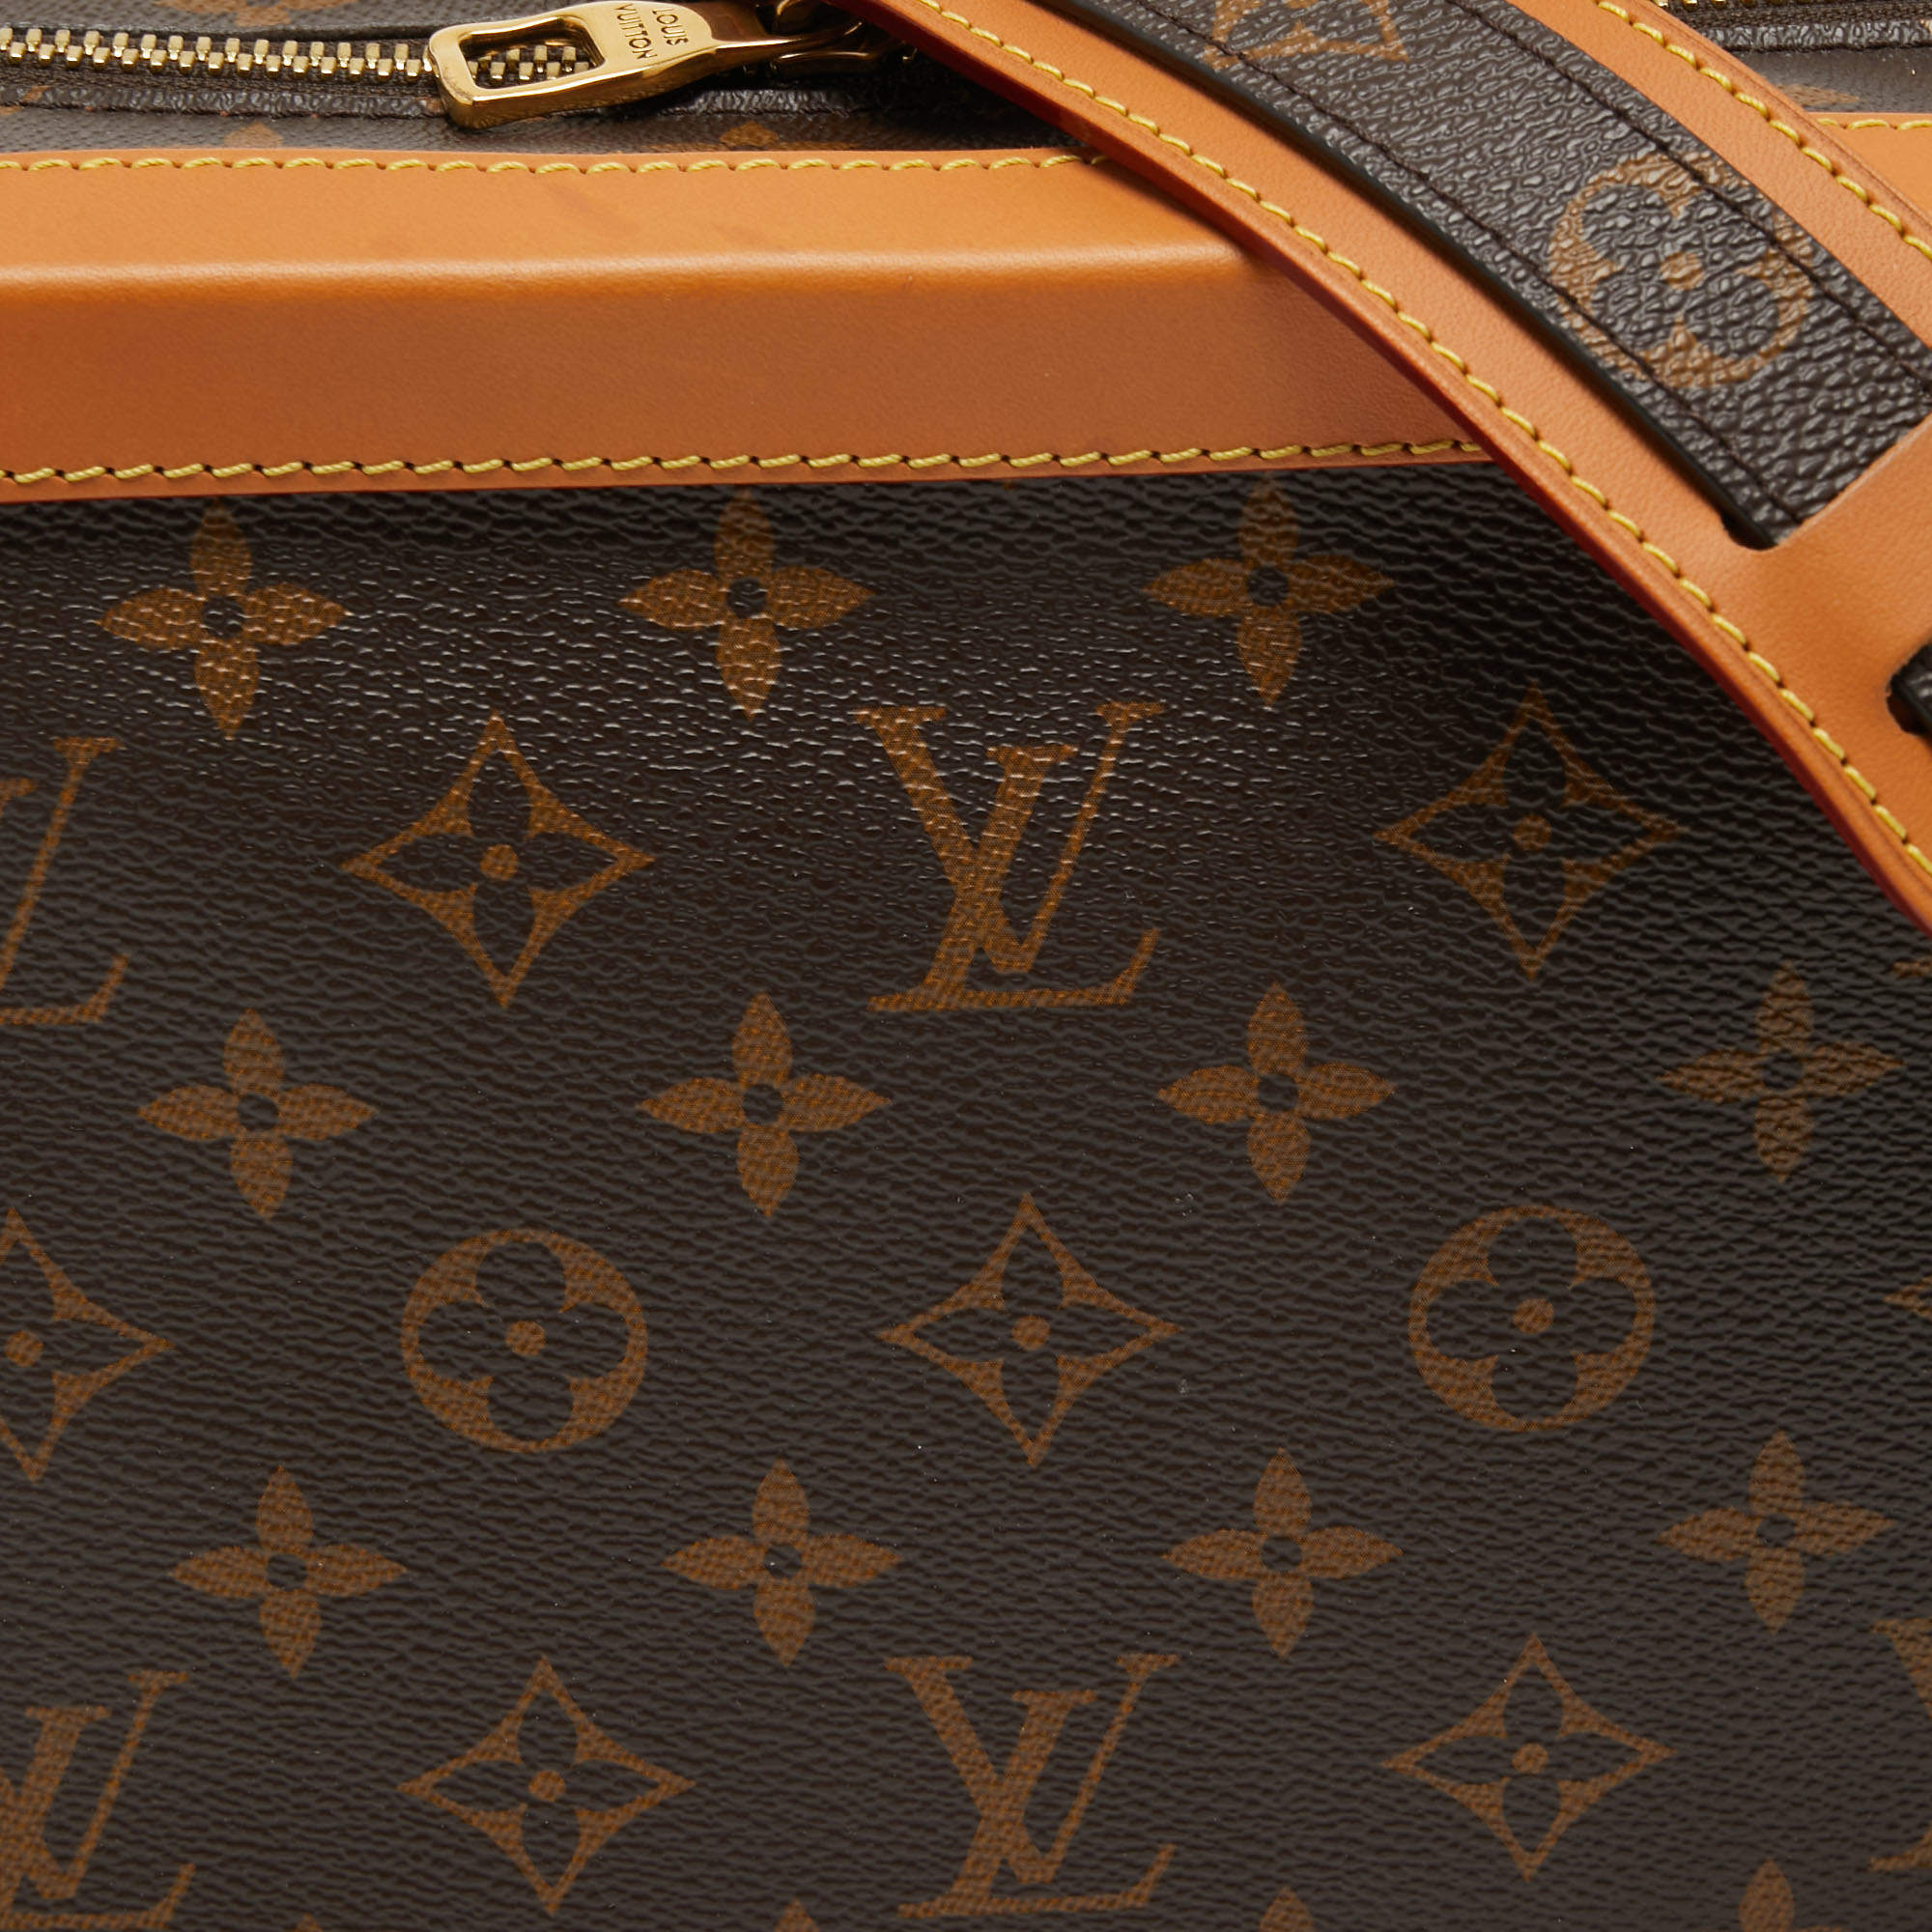 Louis Vuitton White Monogram Leather Legacy Soft Trunk Bag - ShopStyle